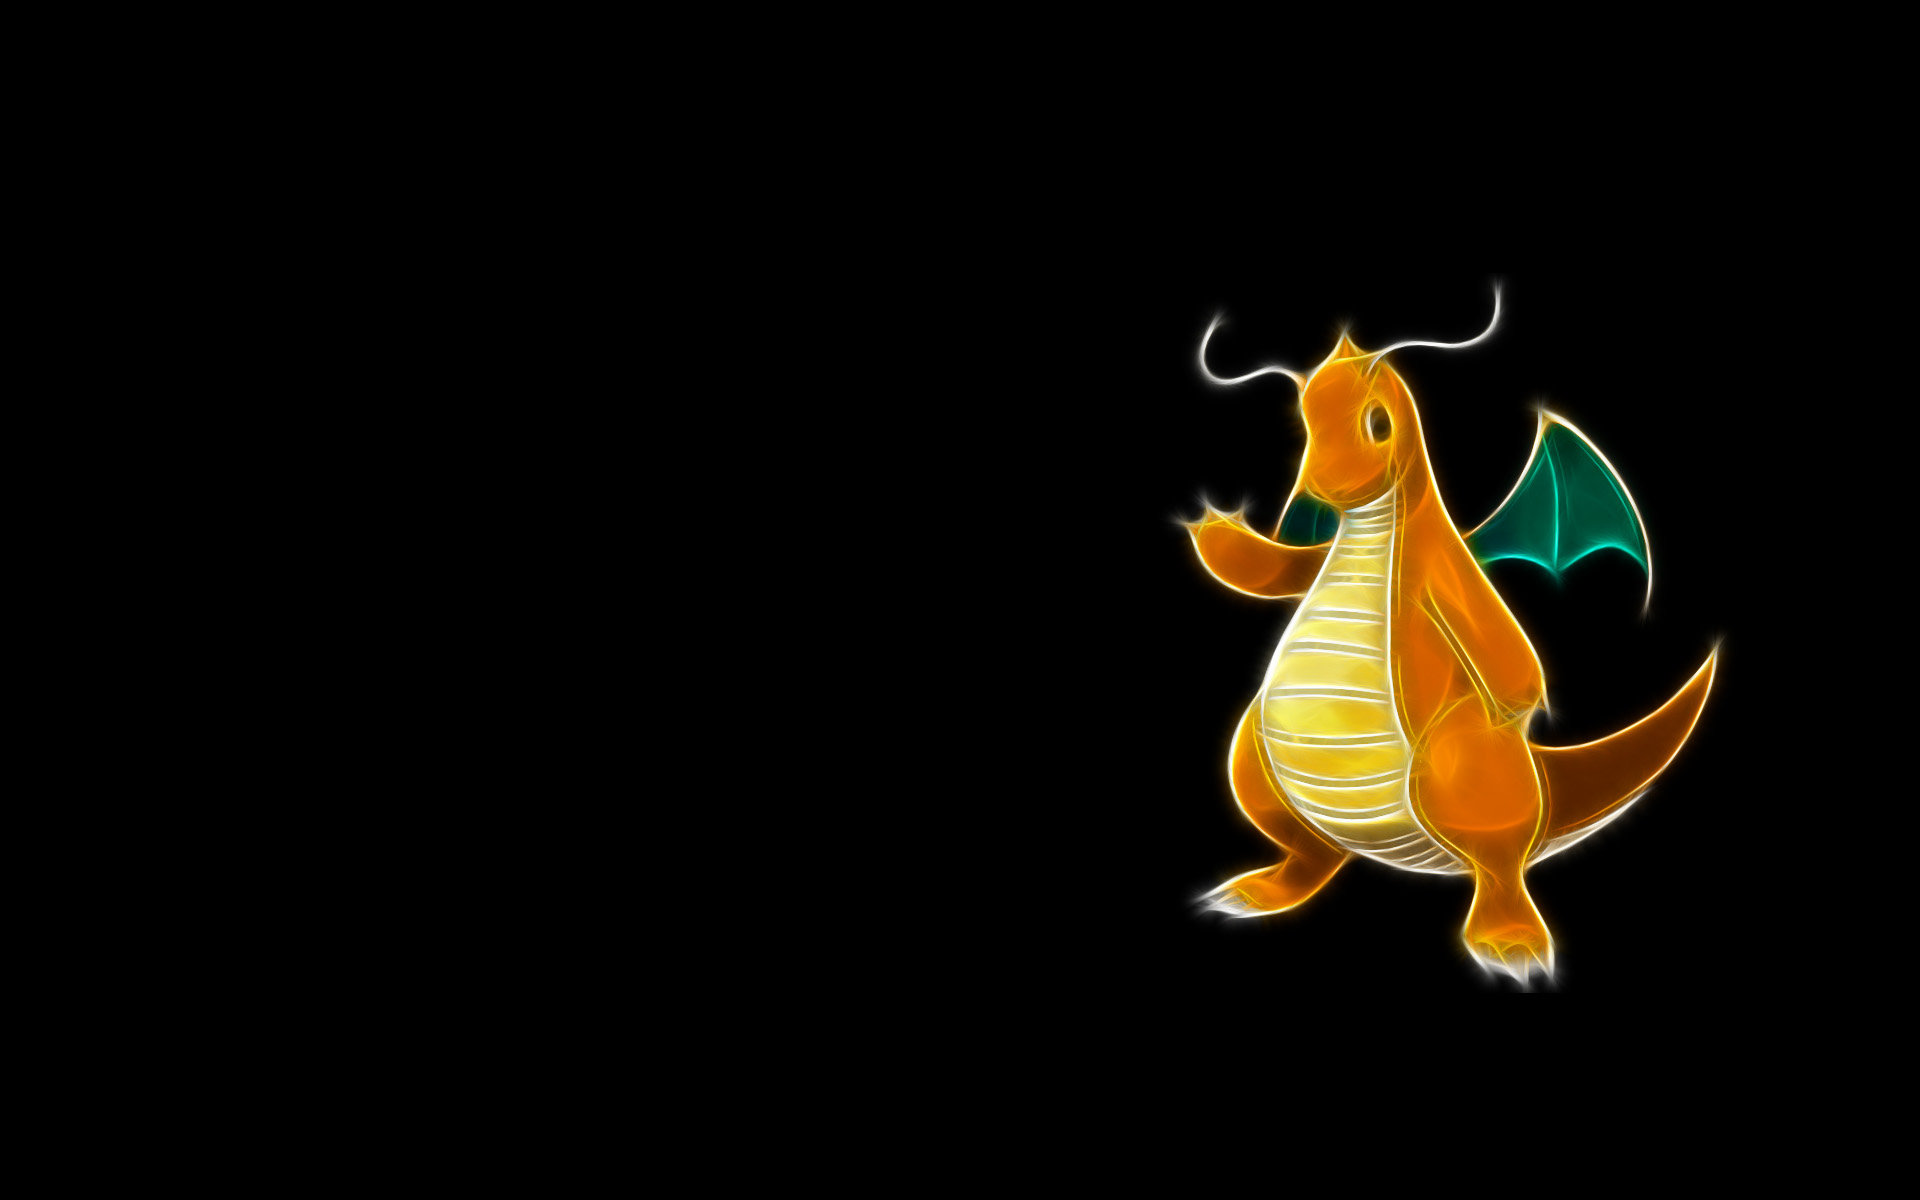 Best Dragonite (Pokemon) wallpaper ID:278963 for High Resolution hd 1920x1200 computer